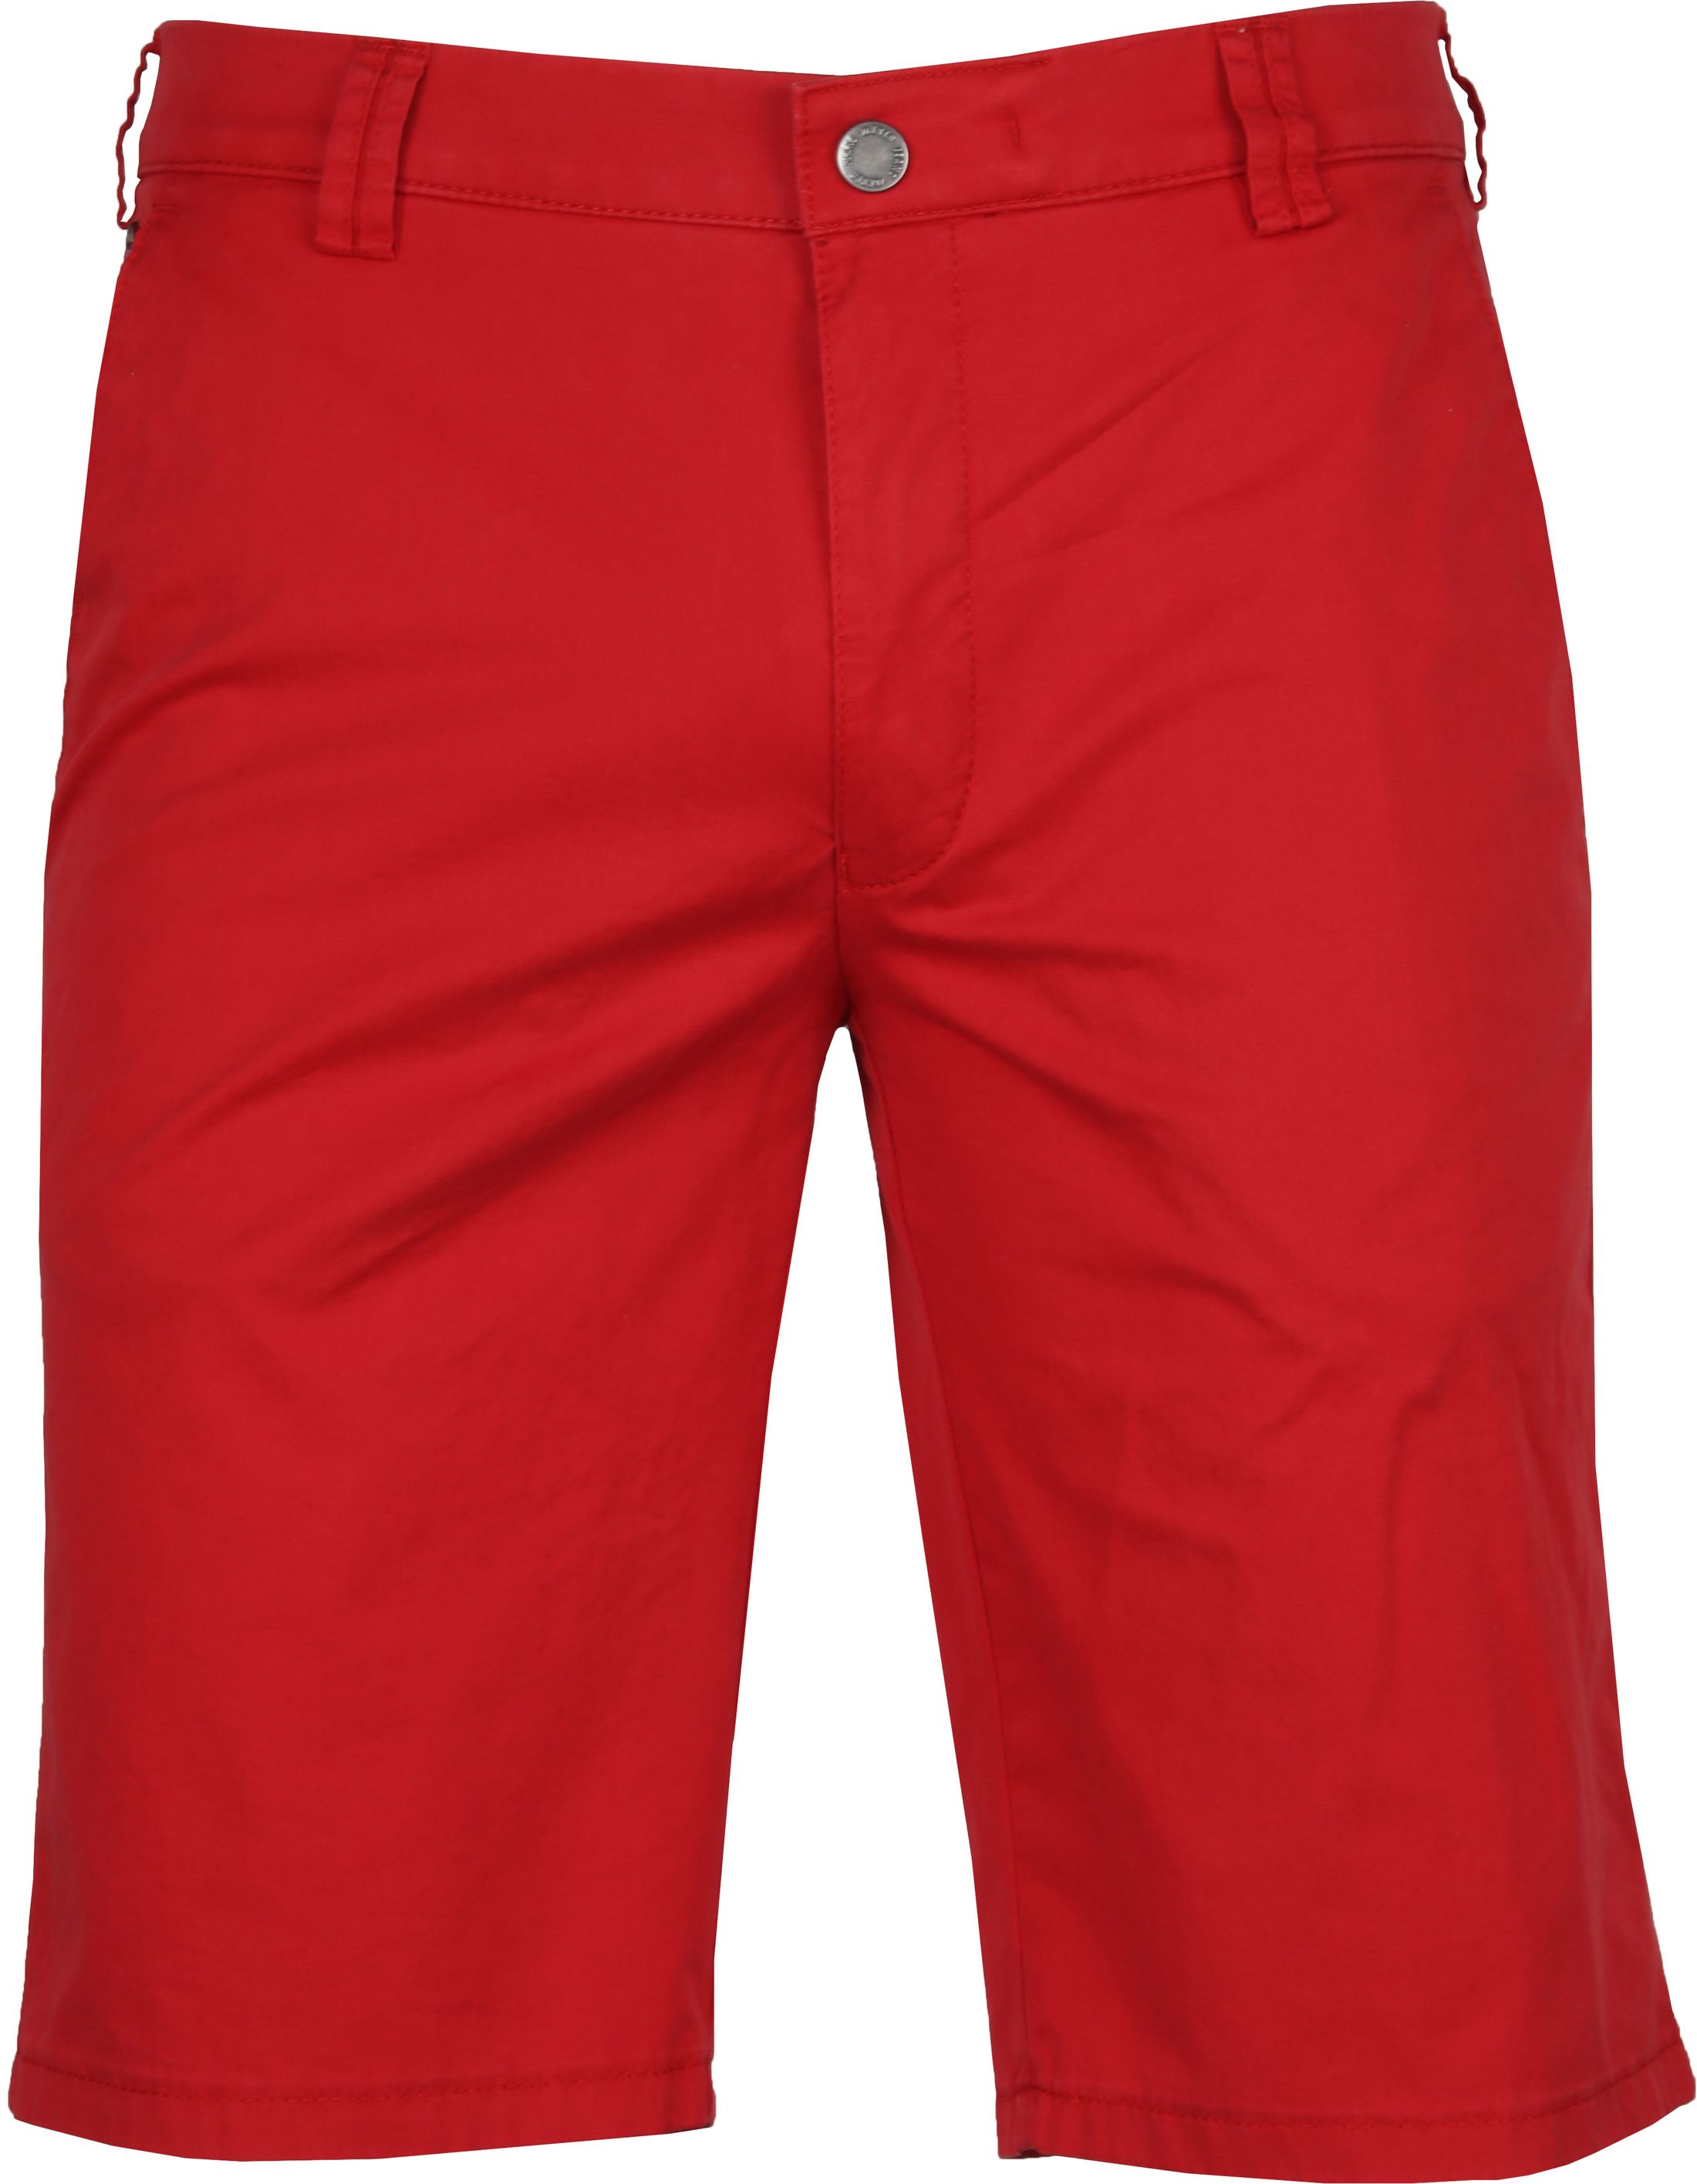 Meyer Palma 3130 Shorts Red size W 40